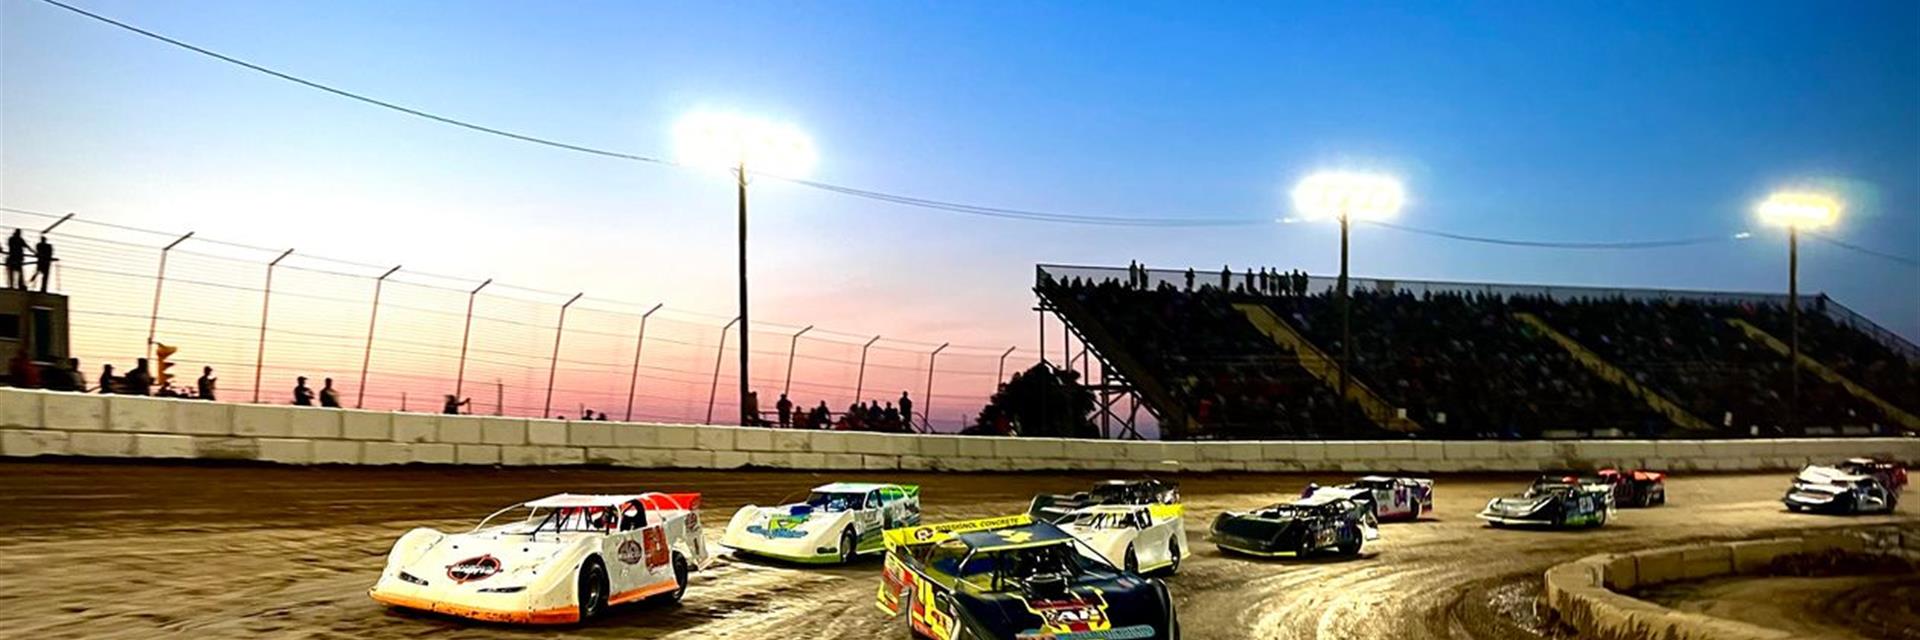 cars on race track at dusk